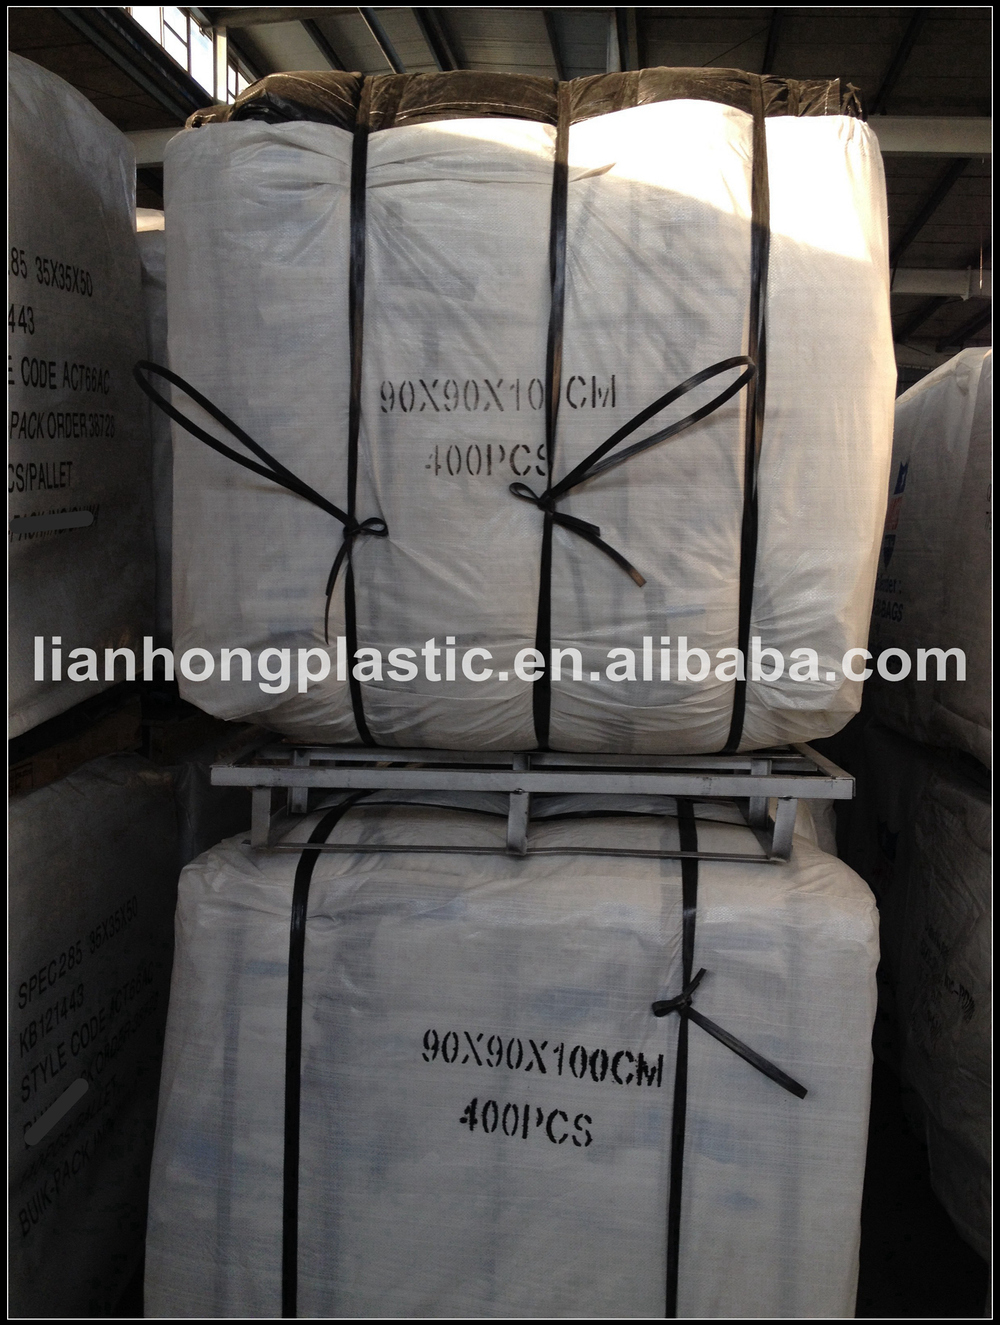 Pp大きな砂袋、 耐久性1000キログラムppバルク砂袋、 中国ppジャンボ砂袋仕入れ・メーカー・工場